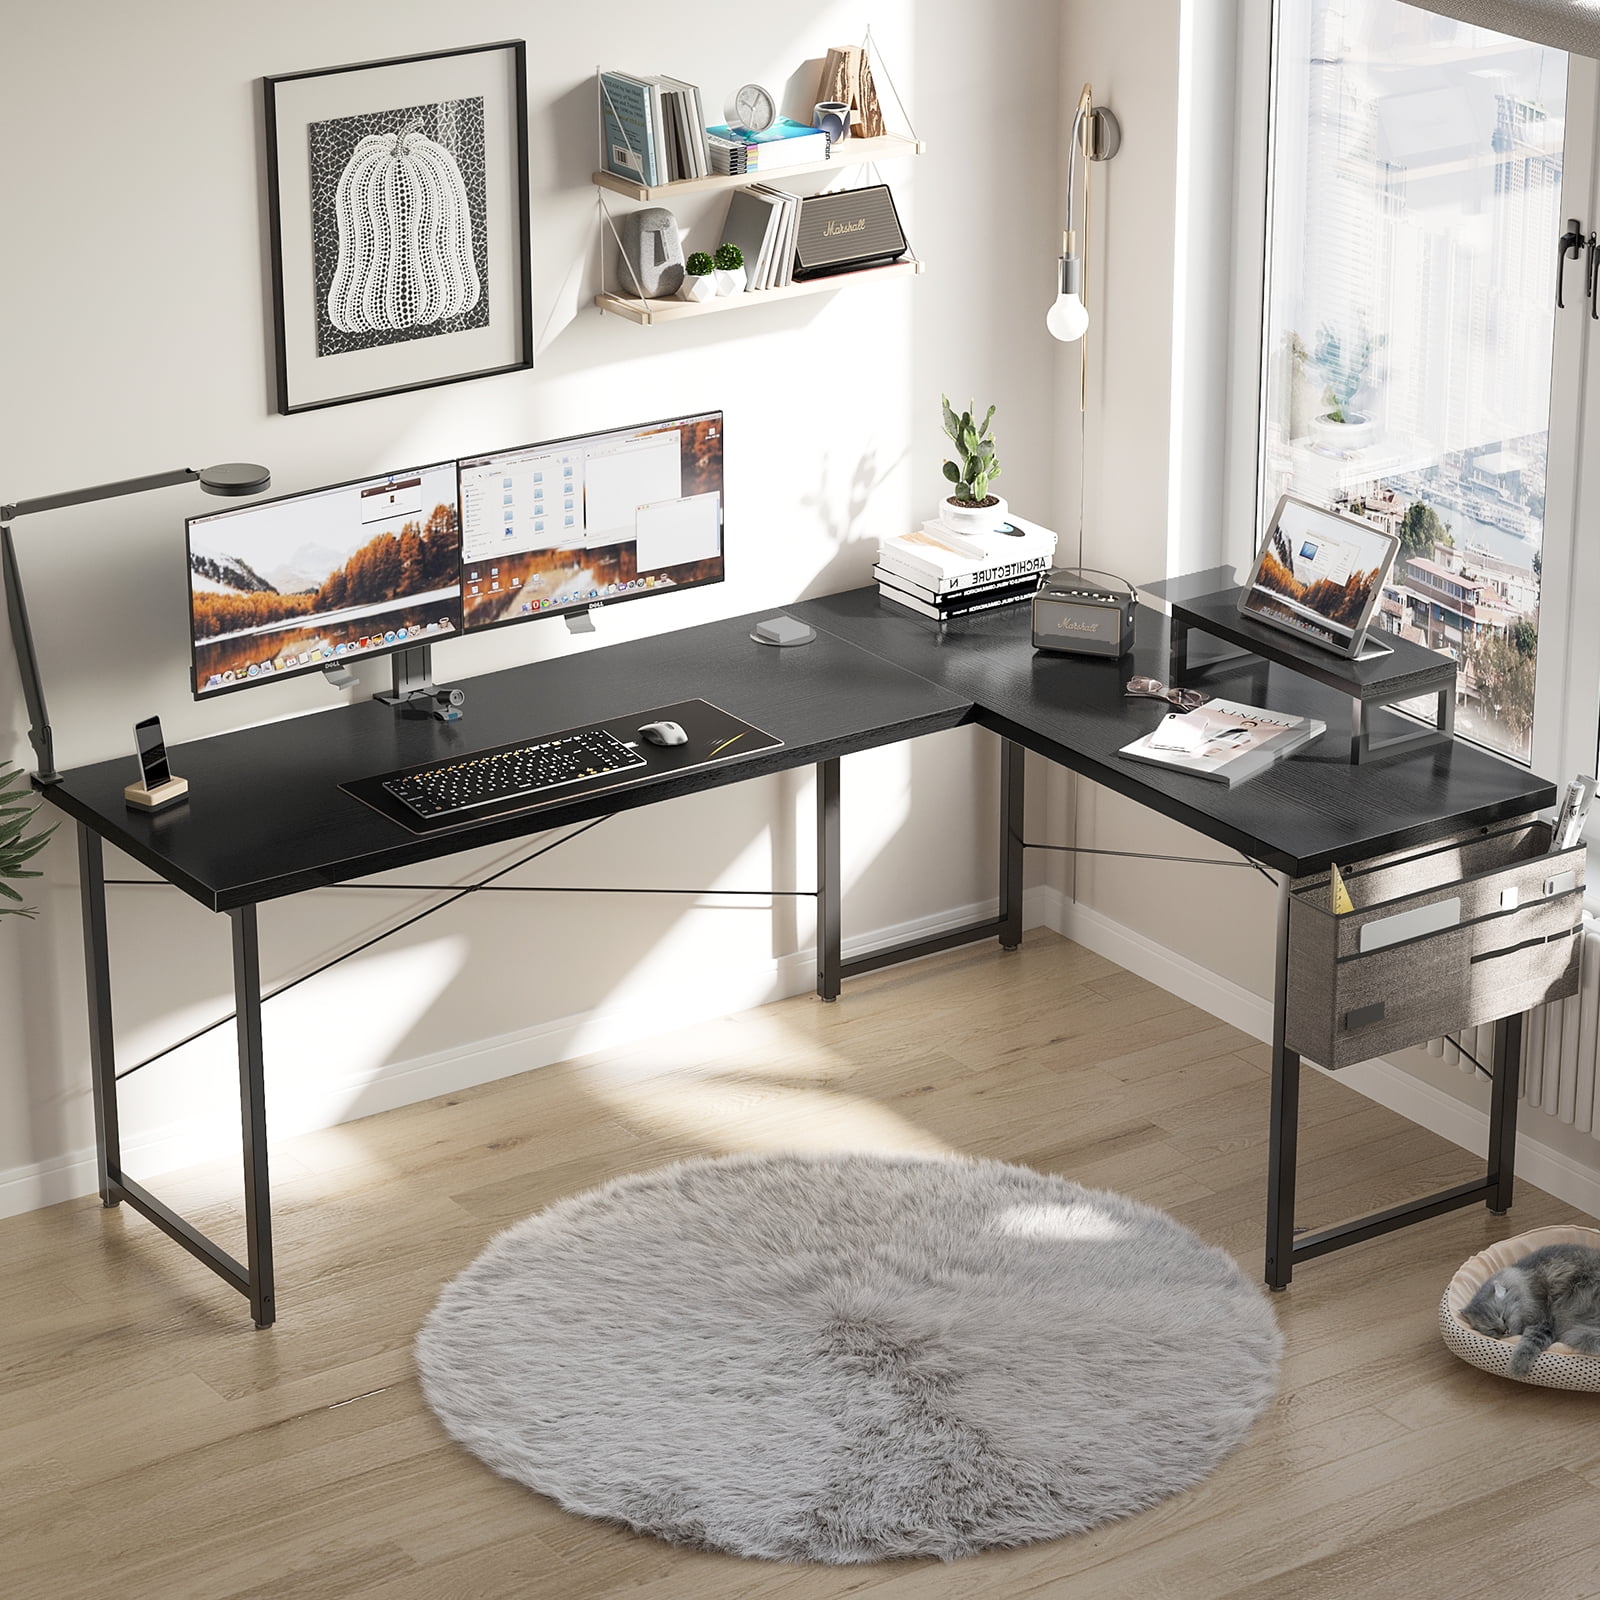 66 Inch Modern L Shaped Desk Corner Computer Desk With Monitor Shelf Simple Study Desk Home Office Desk Black 03466ef8 933c 4220 808d Fcaf7f103dc3.ffdd1963d692cbb560f218c0152da9d9 